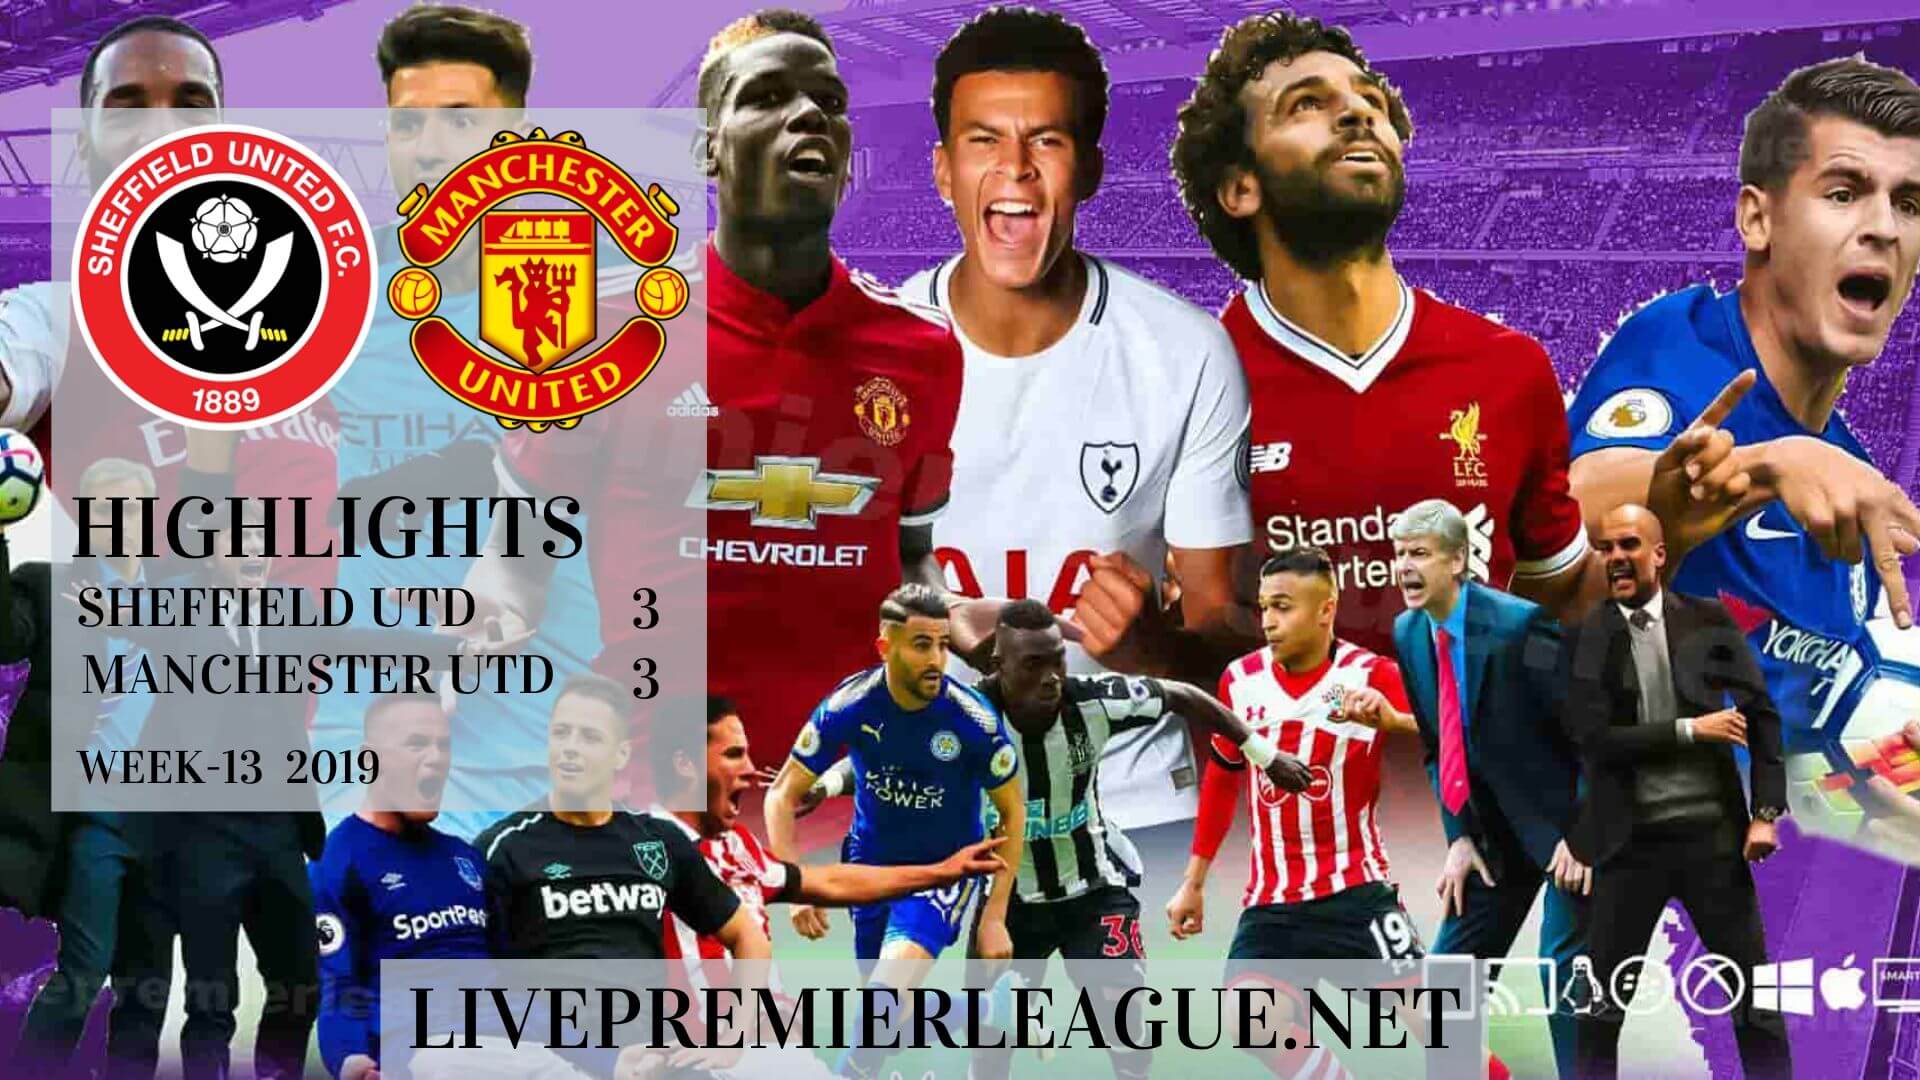 Sheffield United vs Manchester United Highlights 2019 Week 12